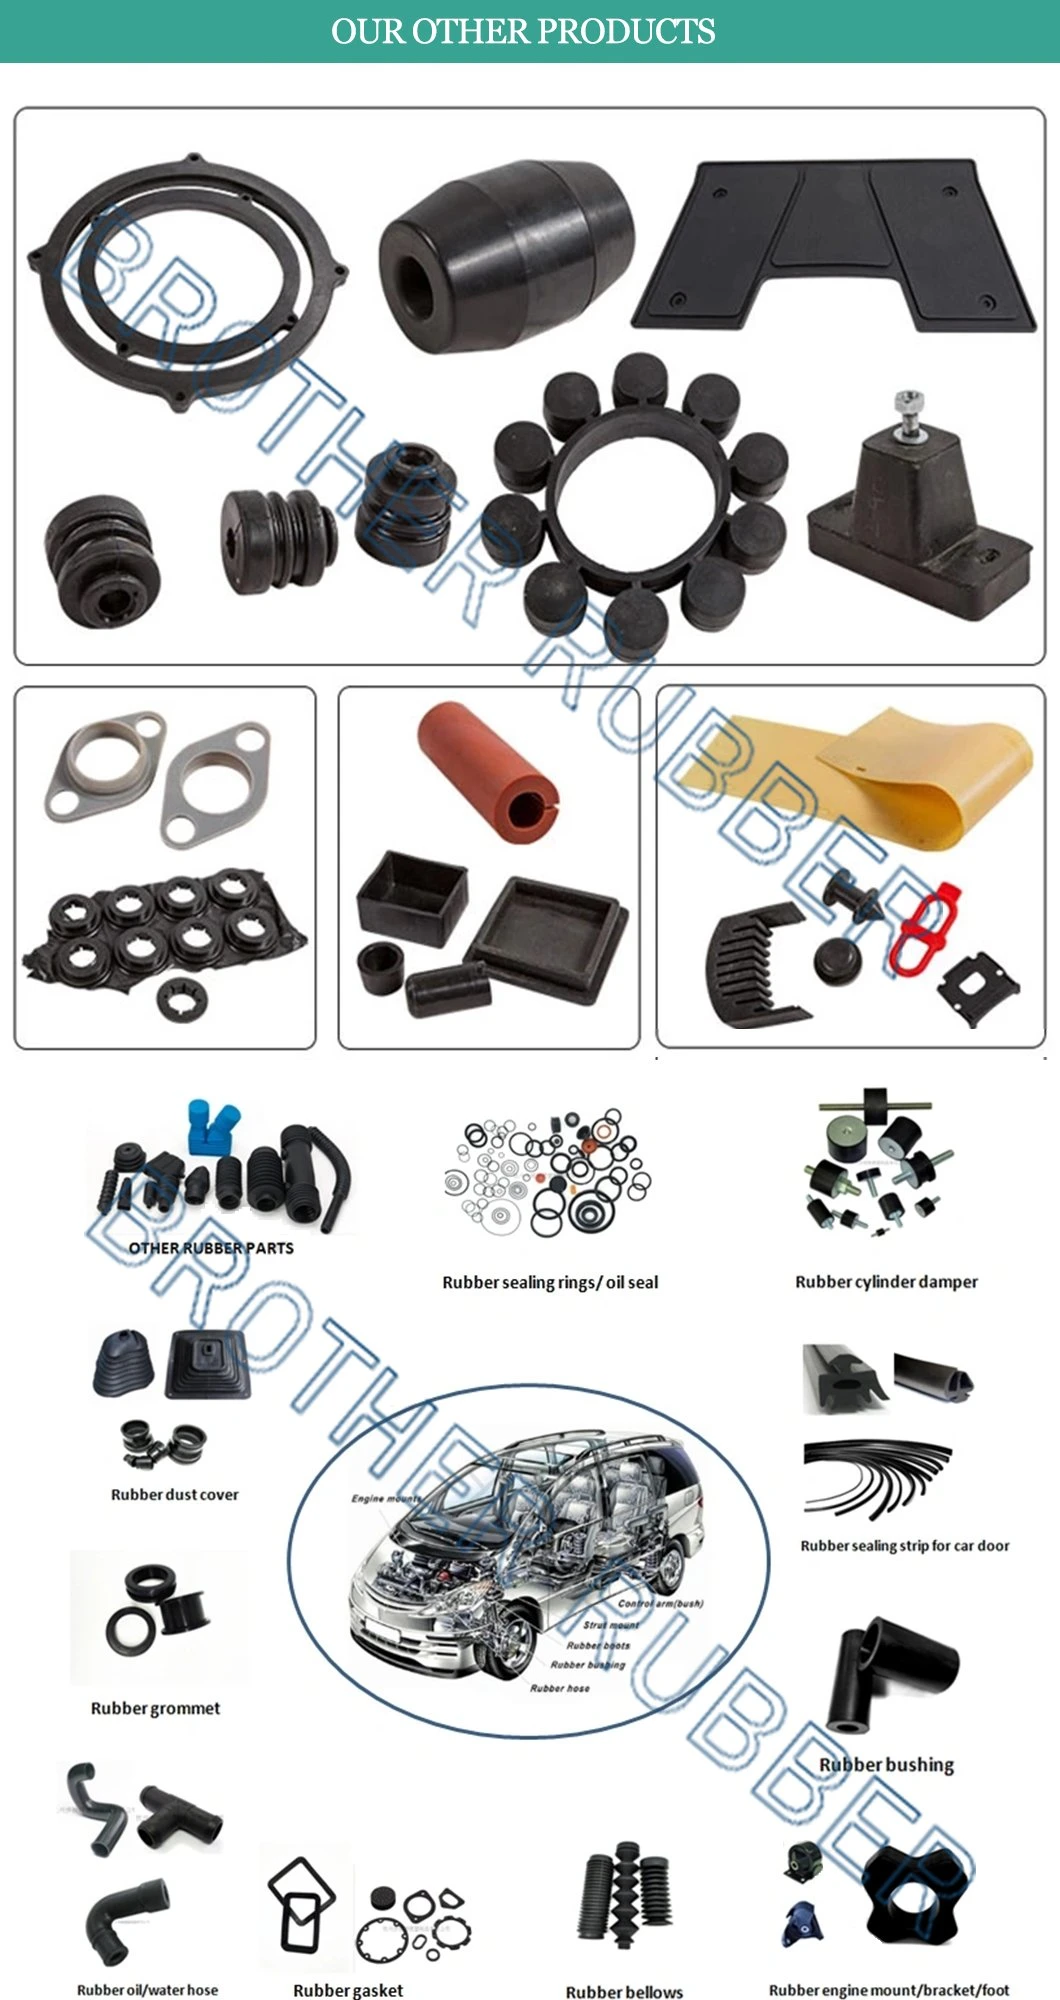 EPDM Rubber Cable Grommets/Rubber Grommets for Sealing/EPDM Rubber Seal Grommets